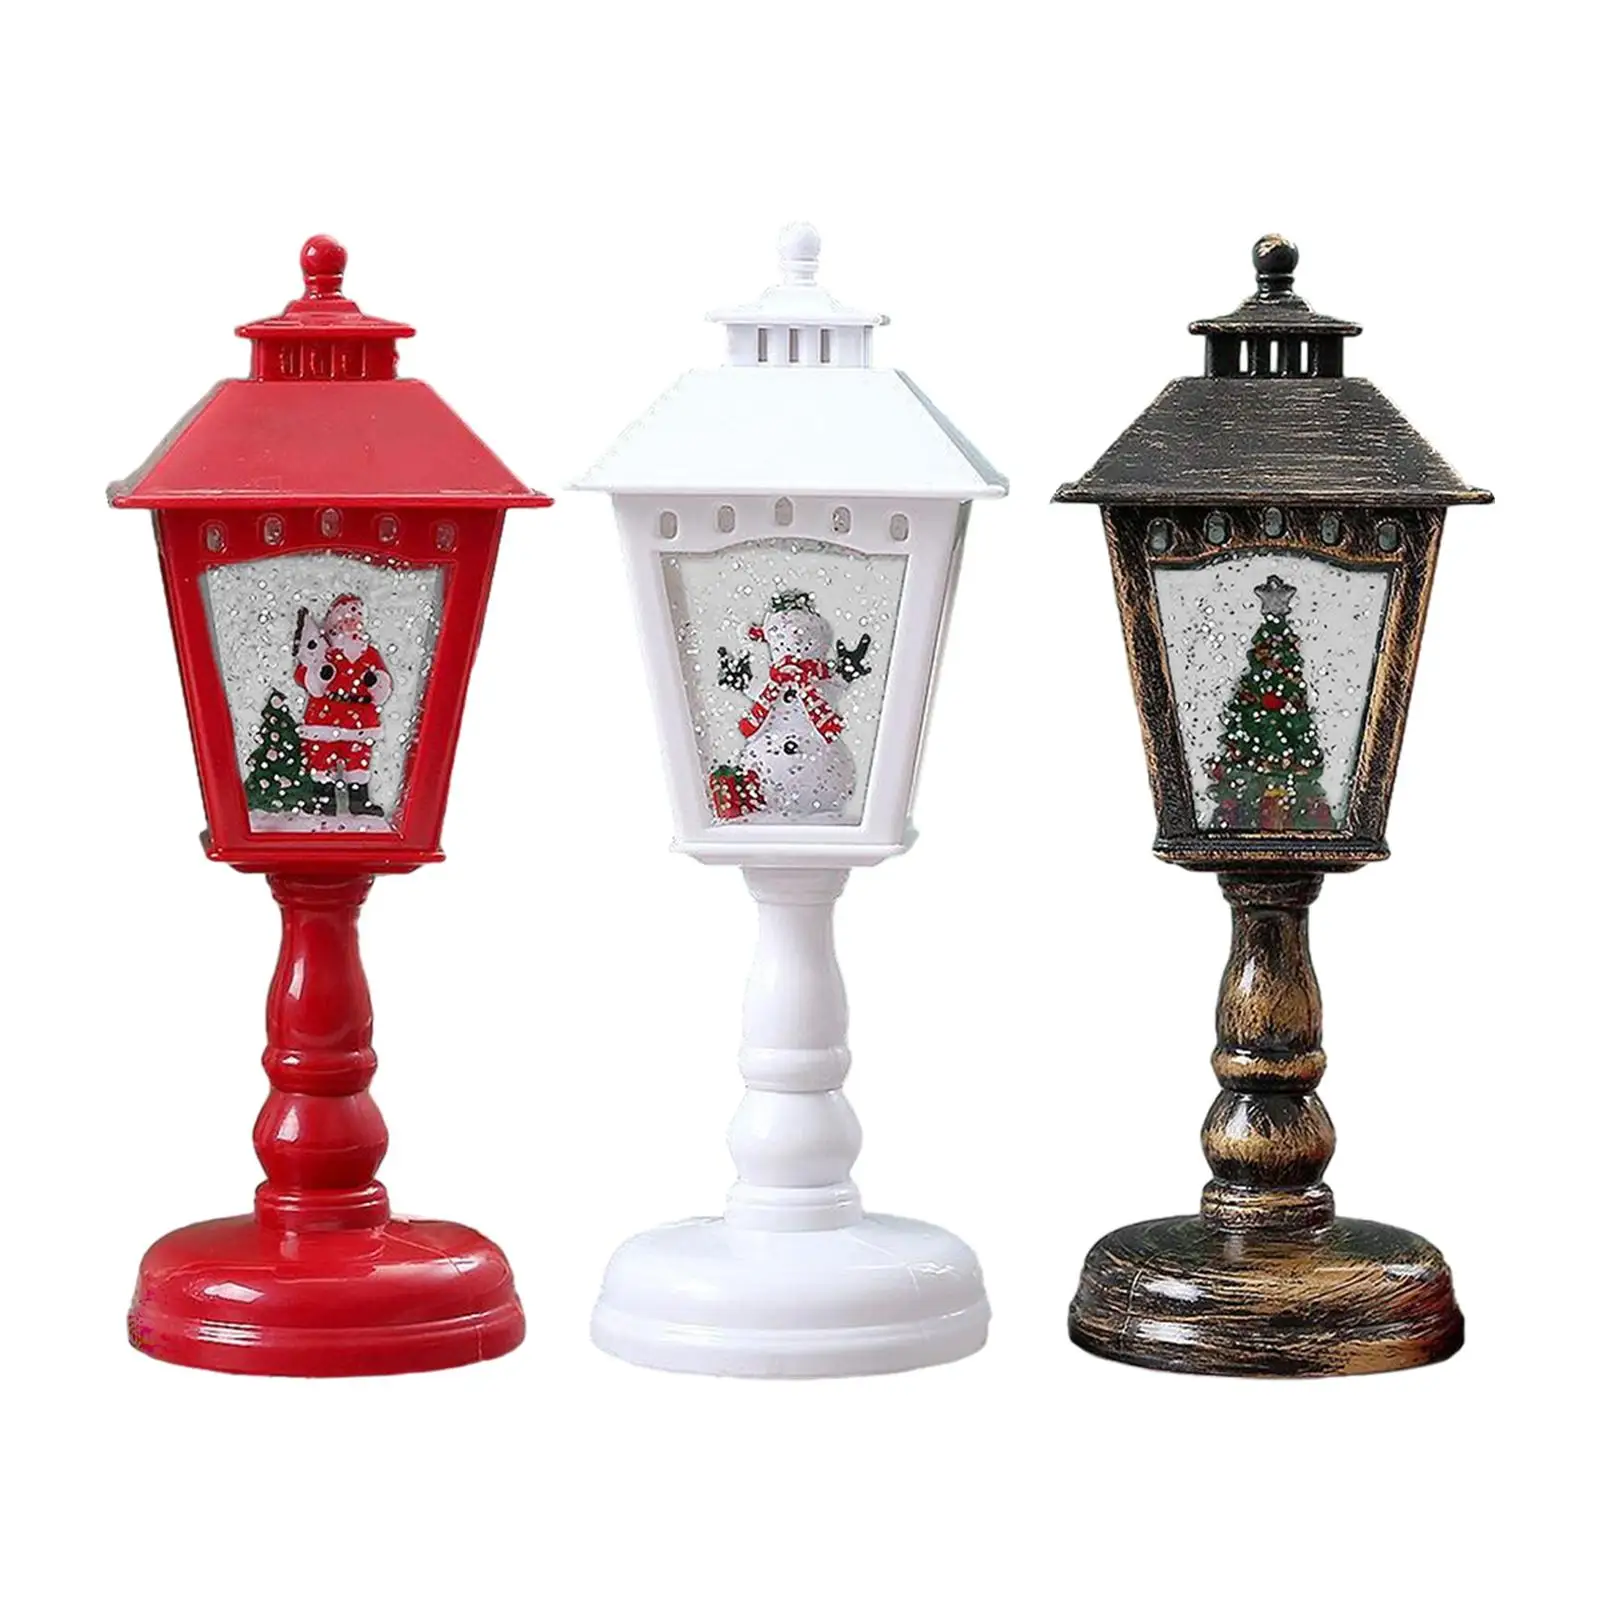 Mini Christmas Lantern with Music Romantic Atmosphere Hanging Decorative